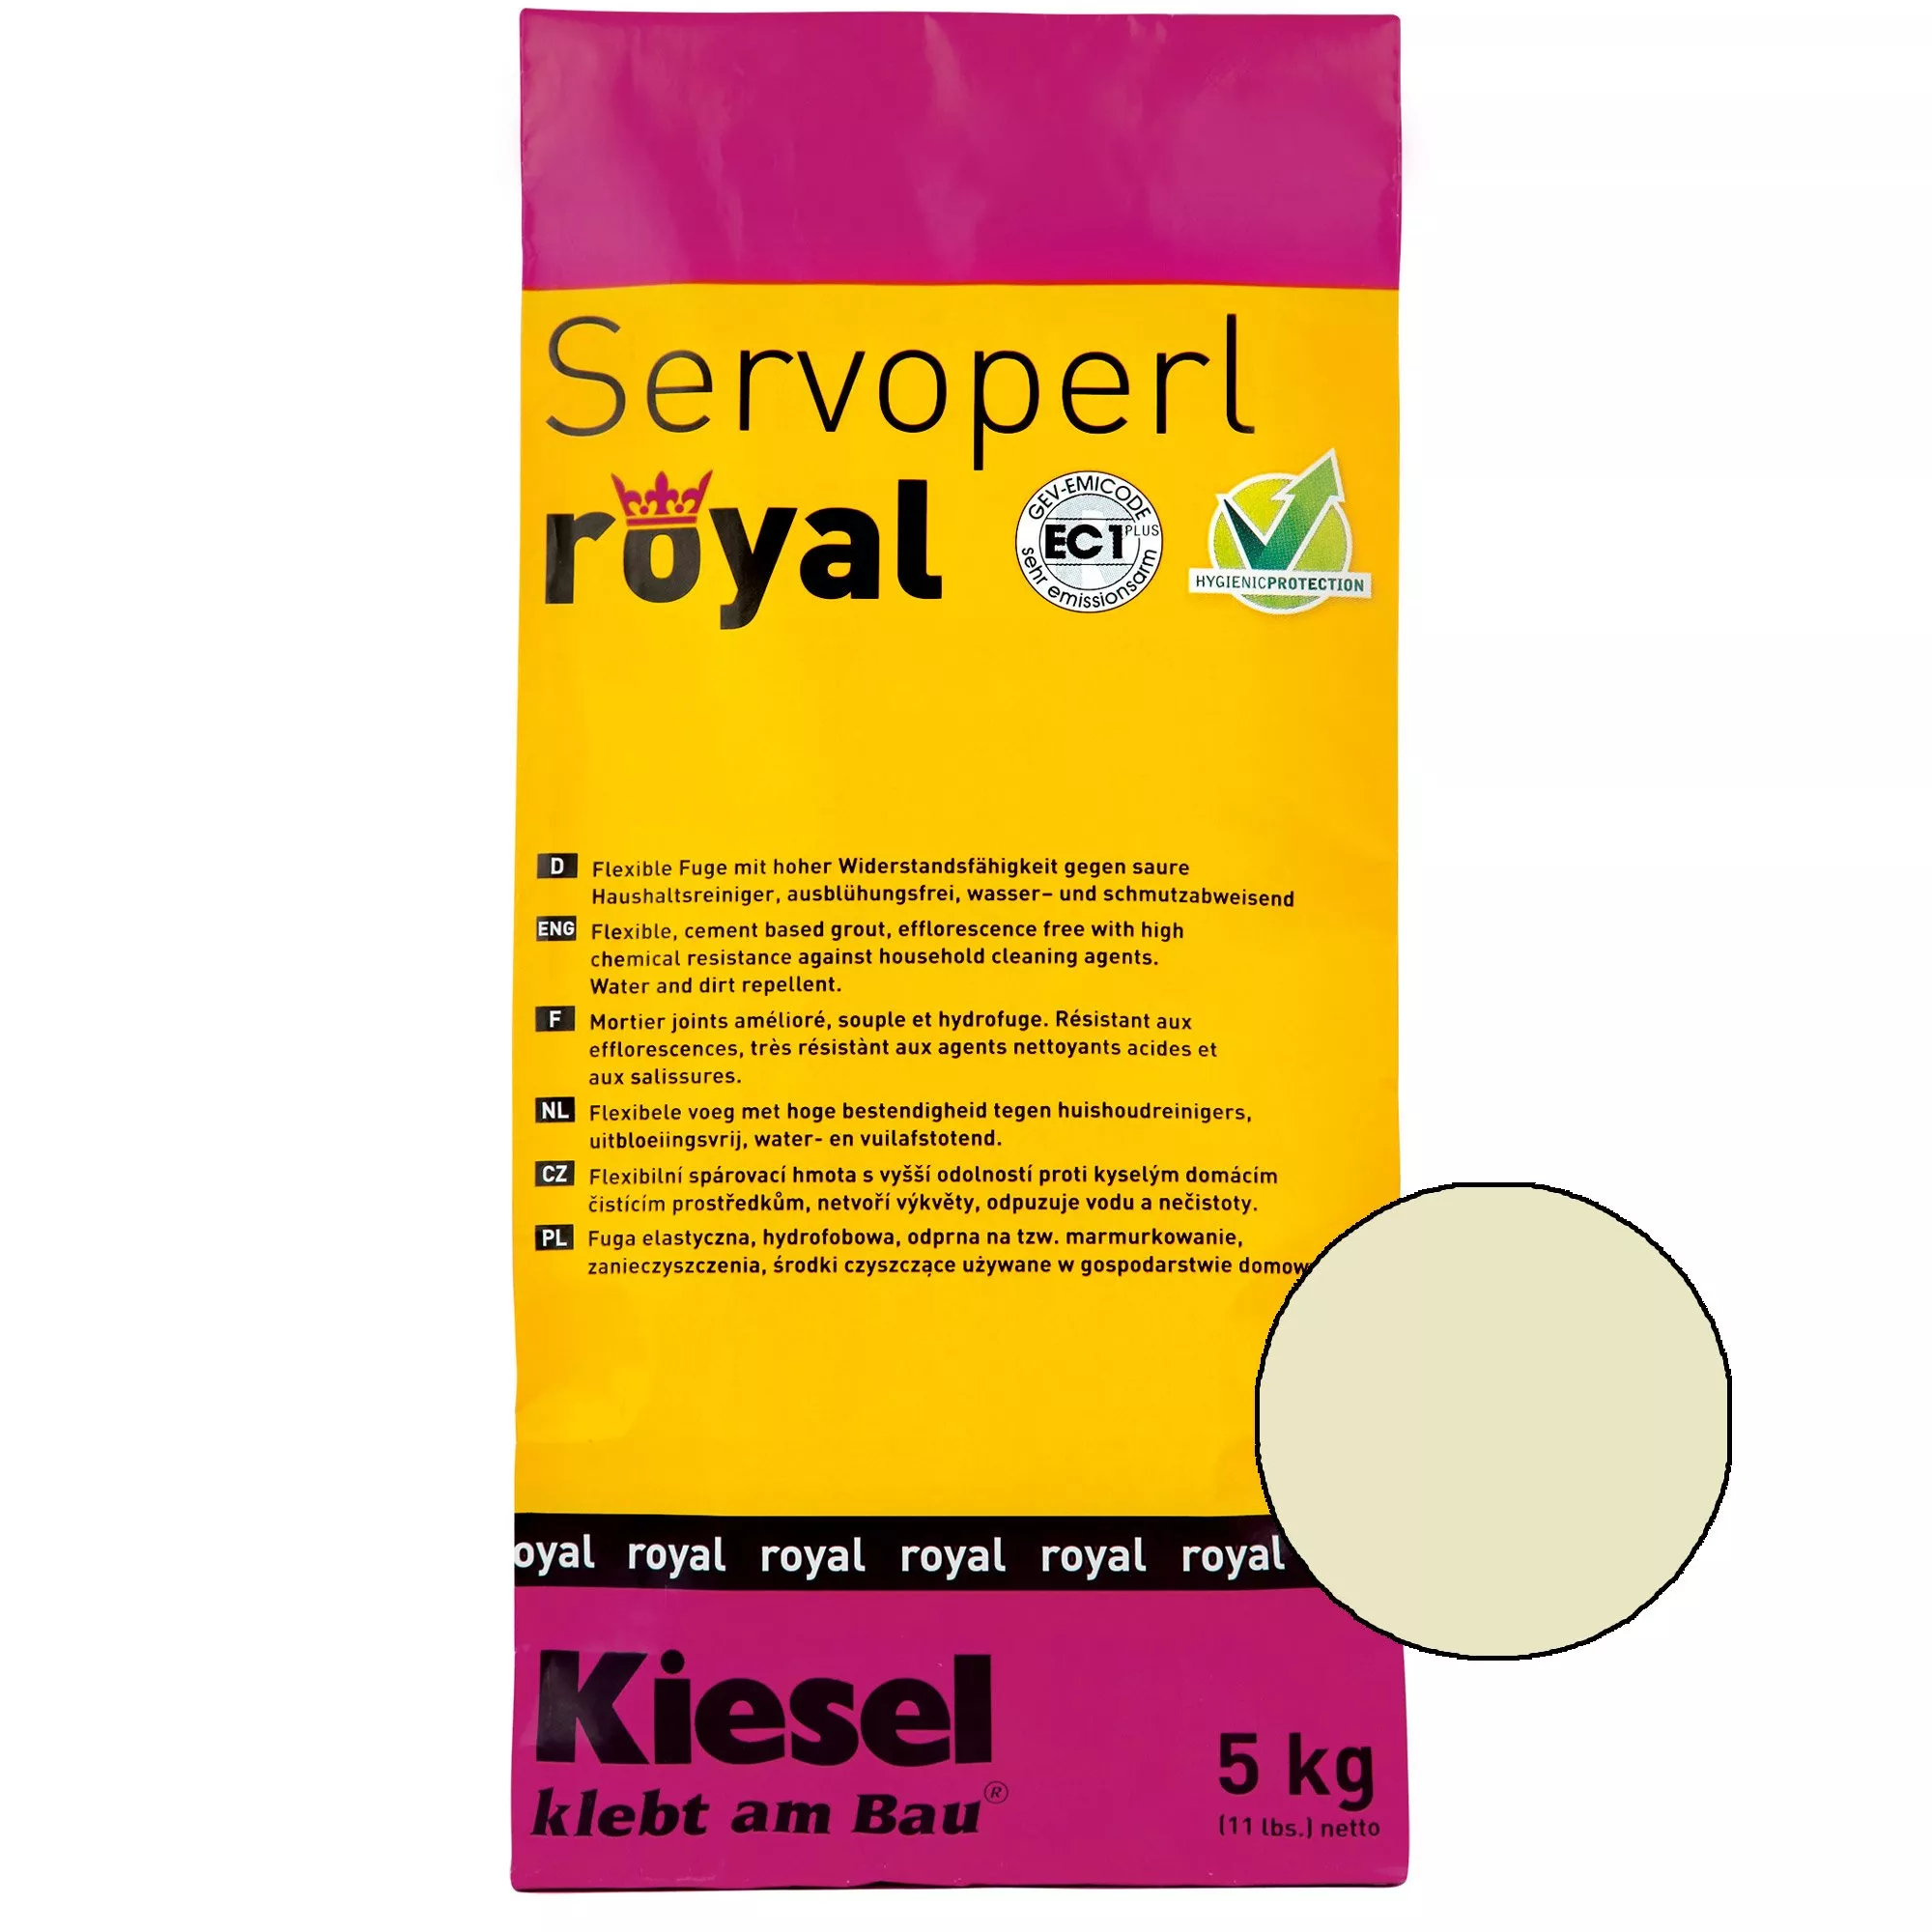 Kiesel Servoperl royal - composto comum - 5kg jasmim